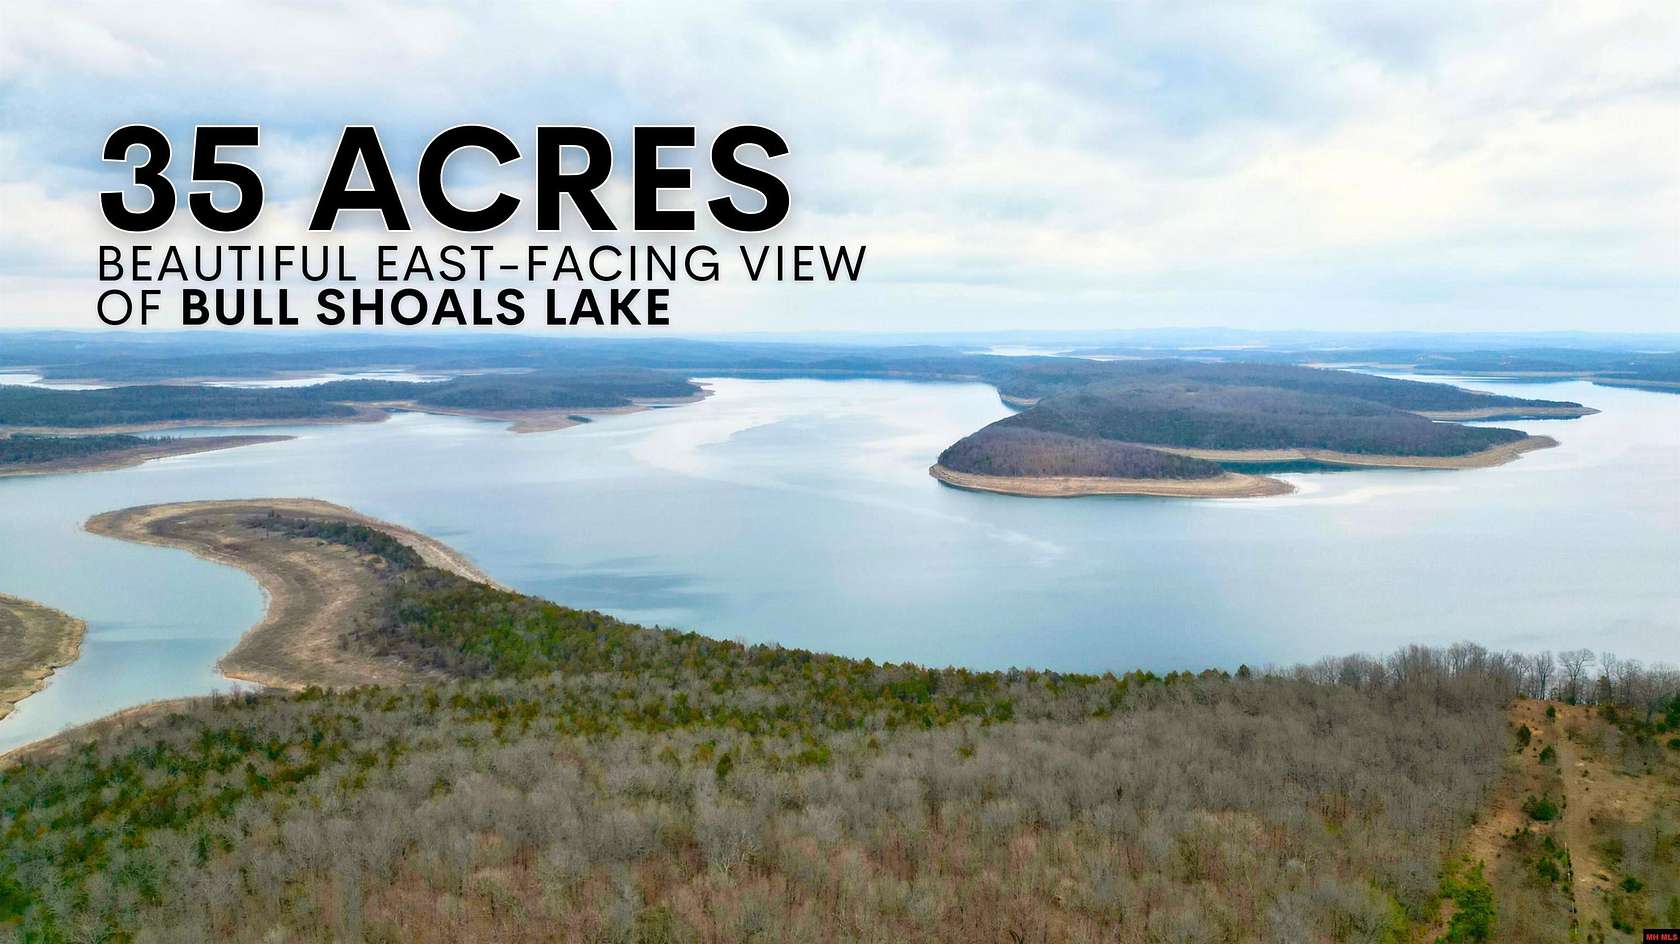 34.4 Acres of Land for Sale in Peel, Arkansas